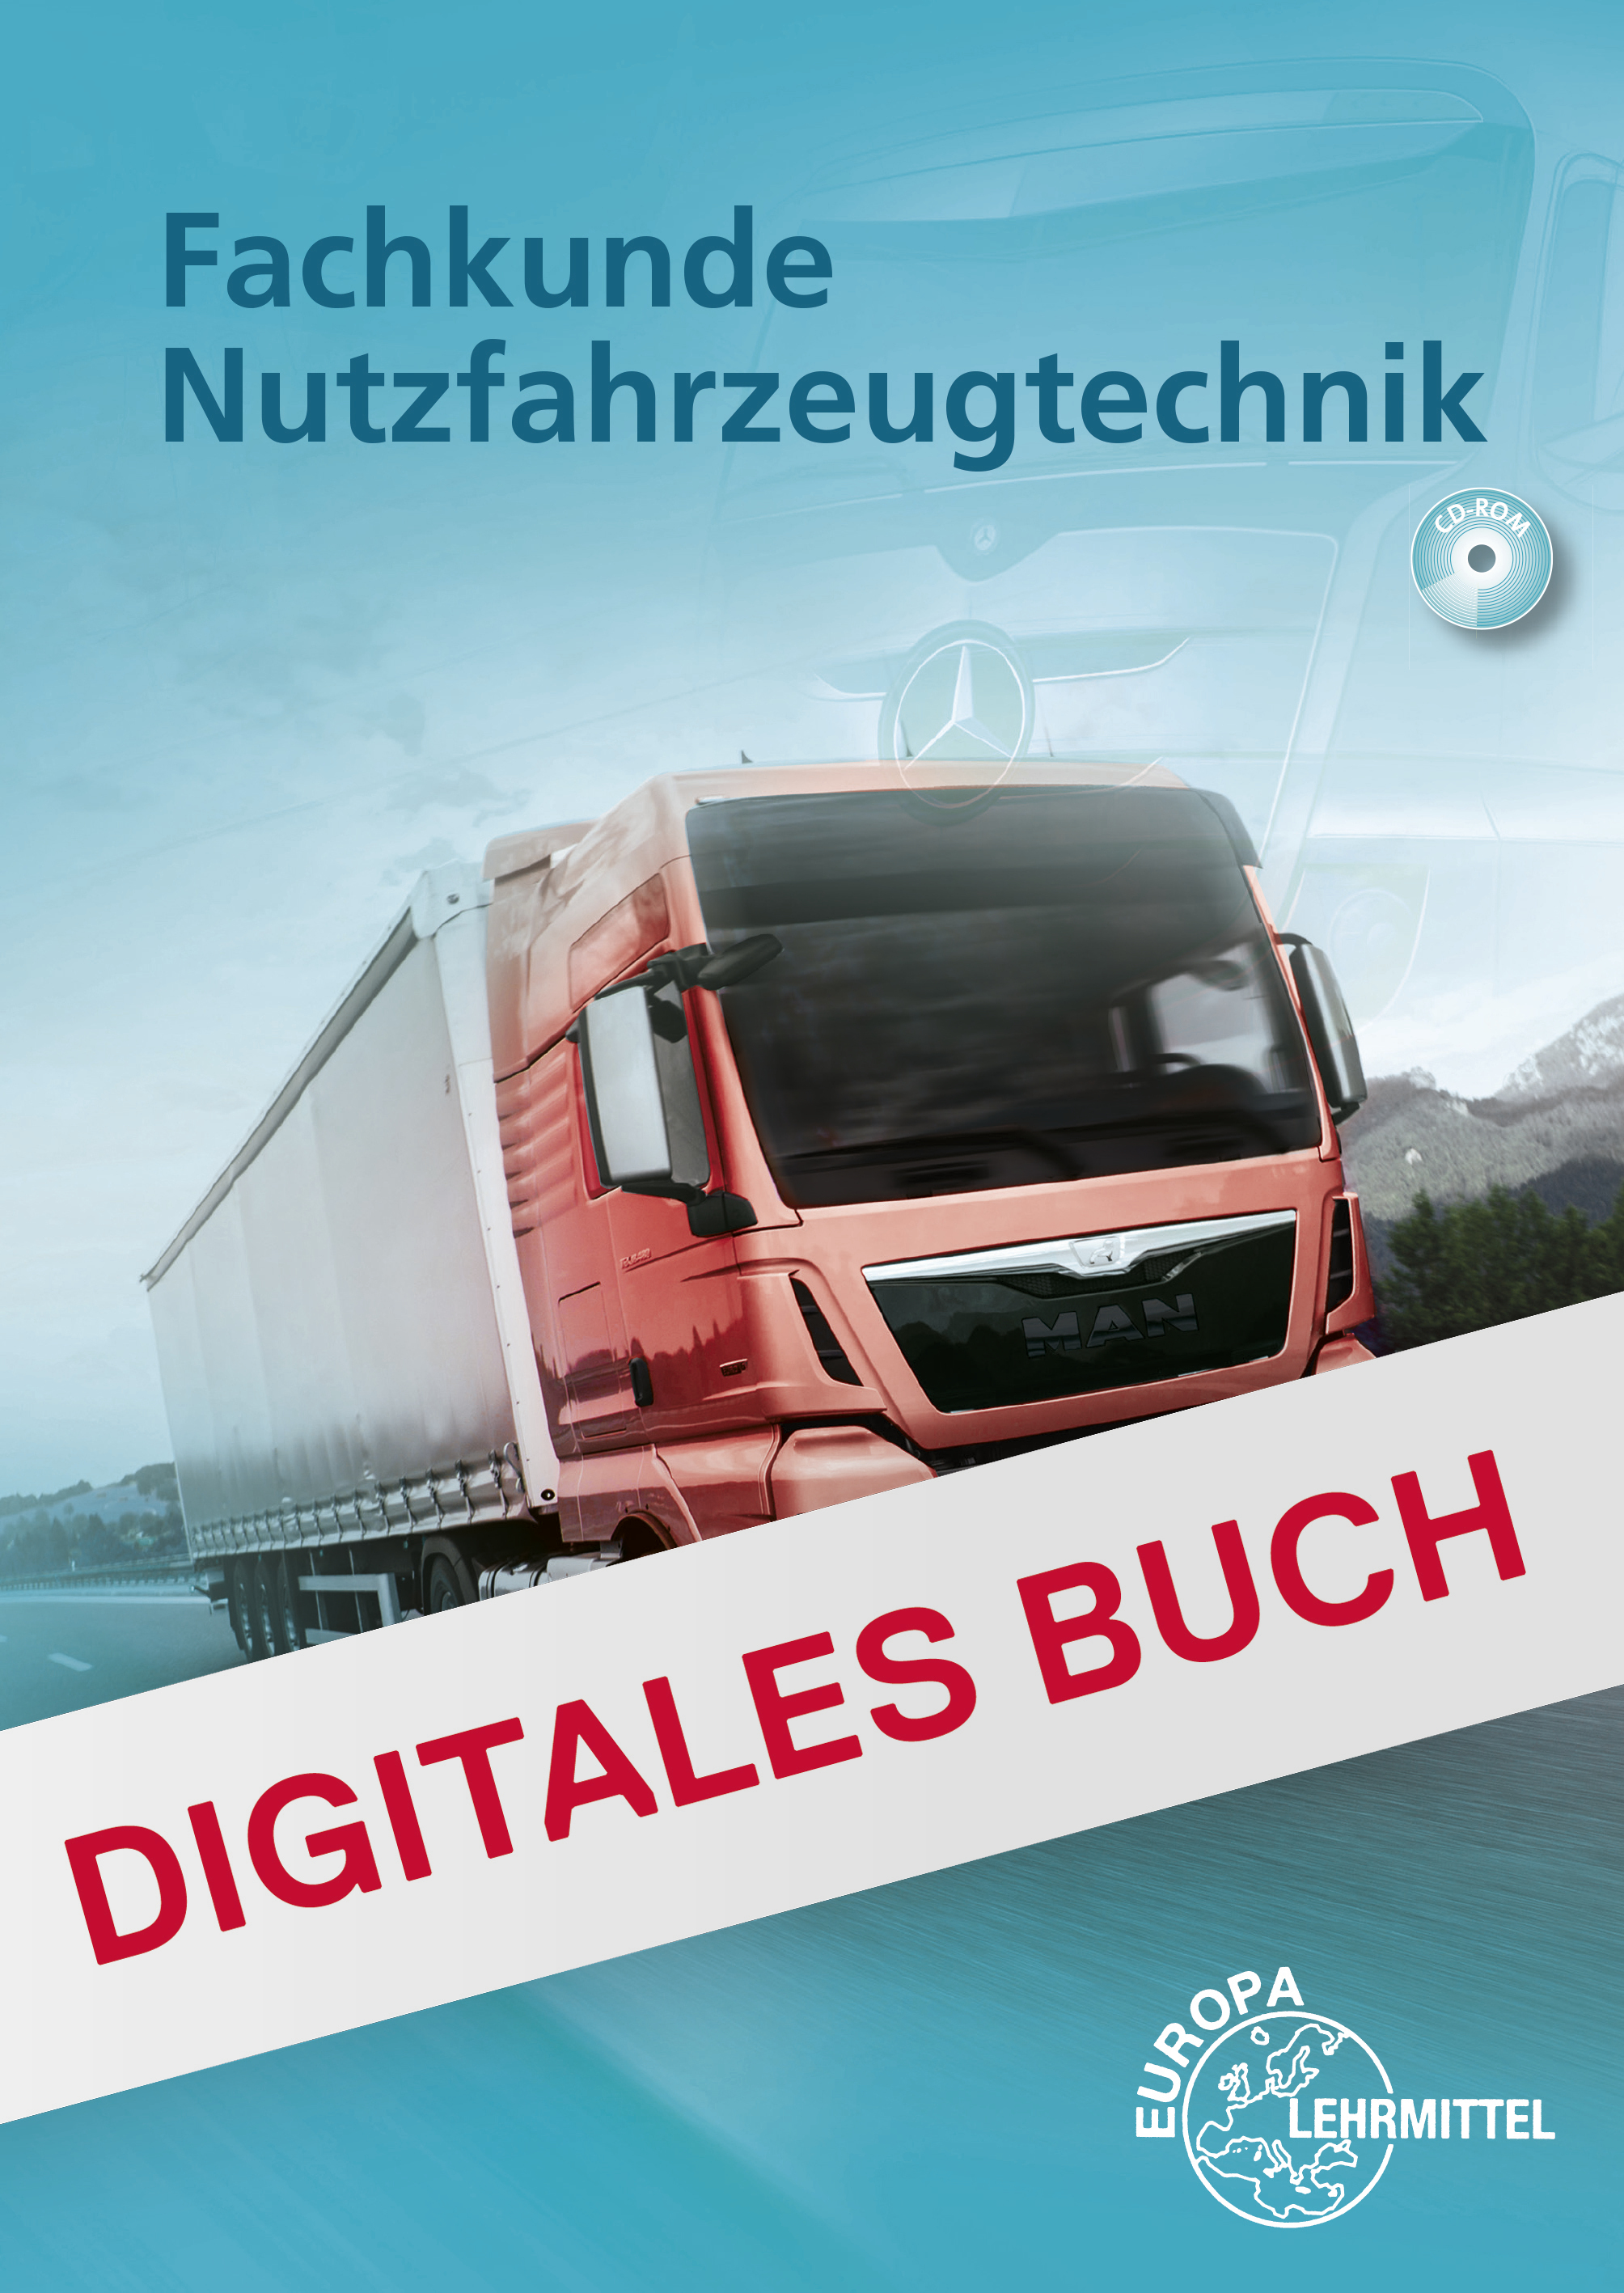 Fachkunde Nutzfahrzeugtechnik - Digitales Buch